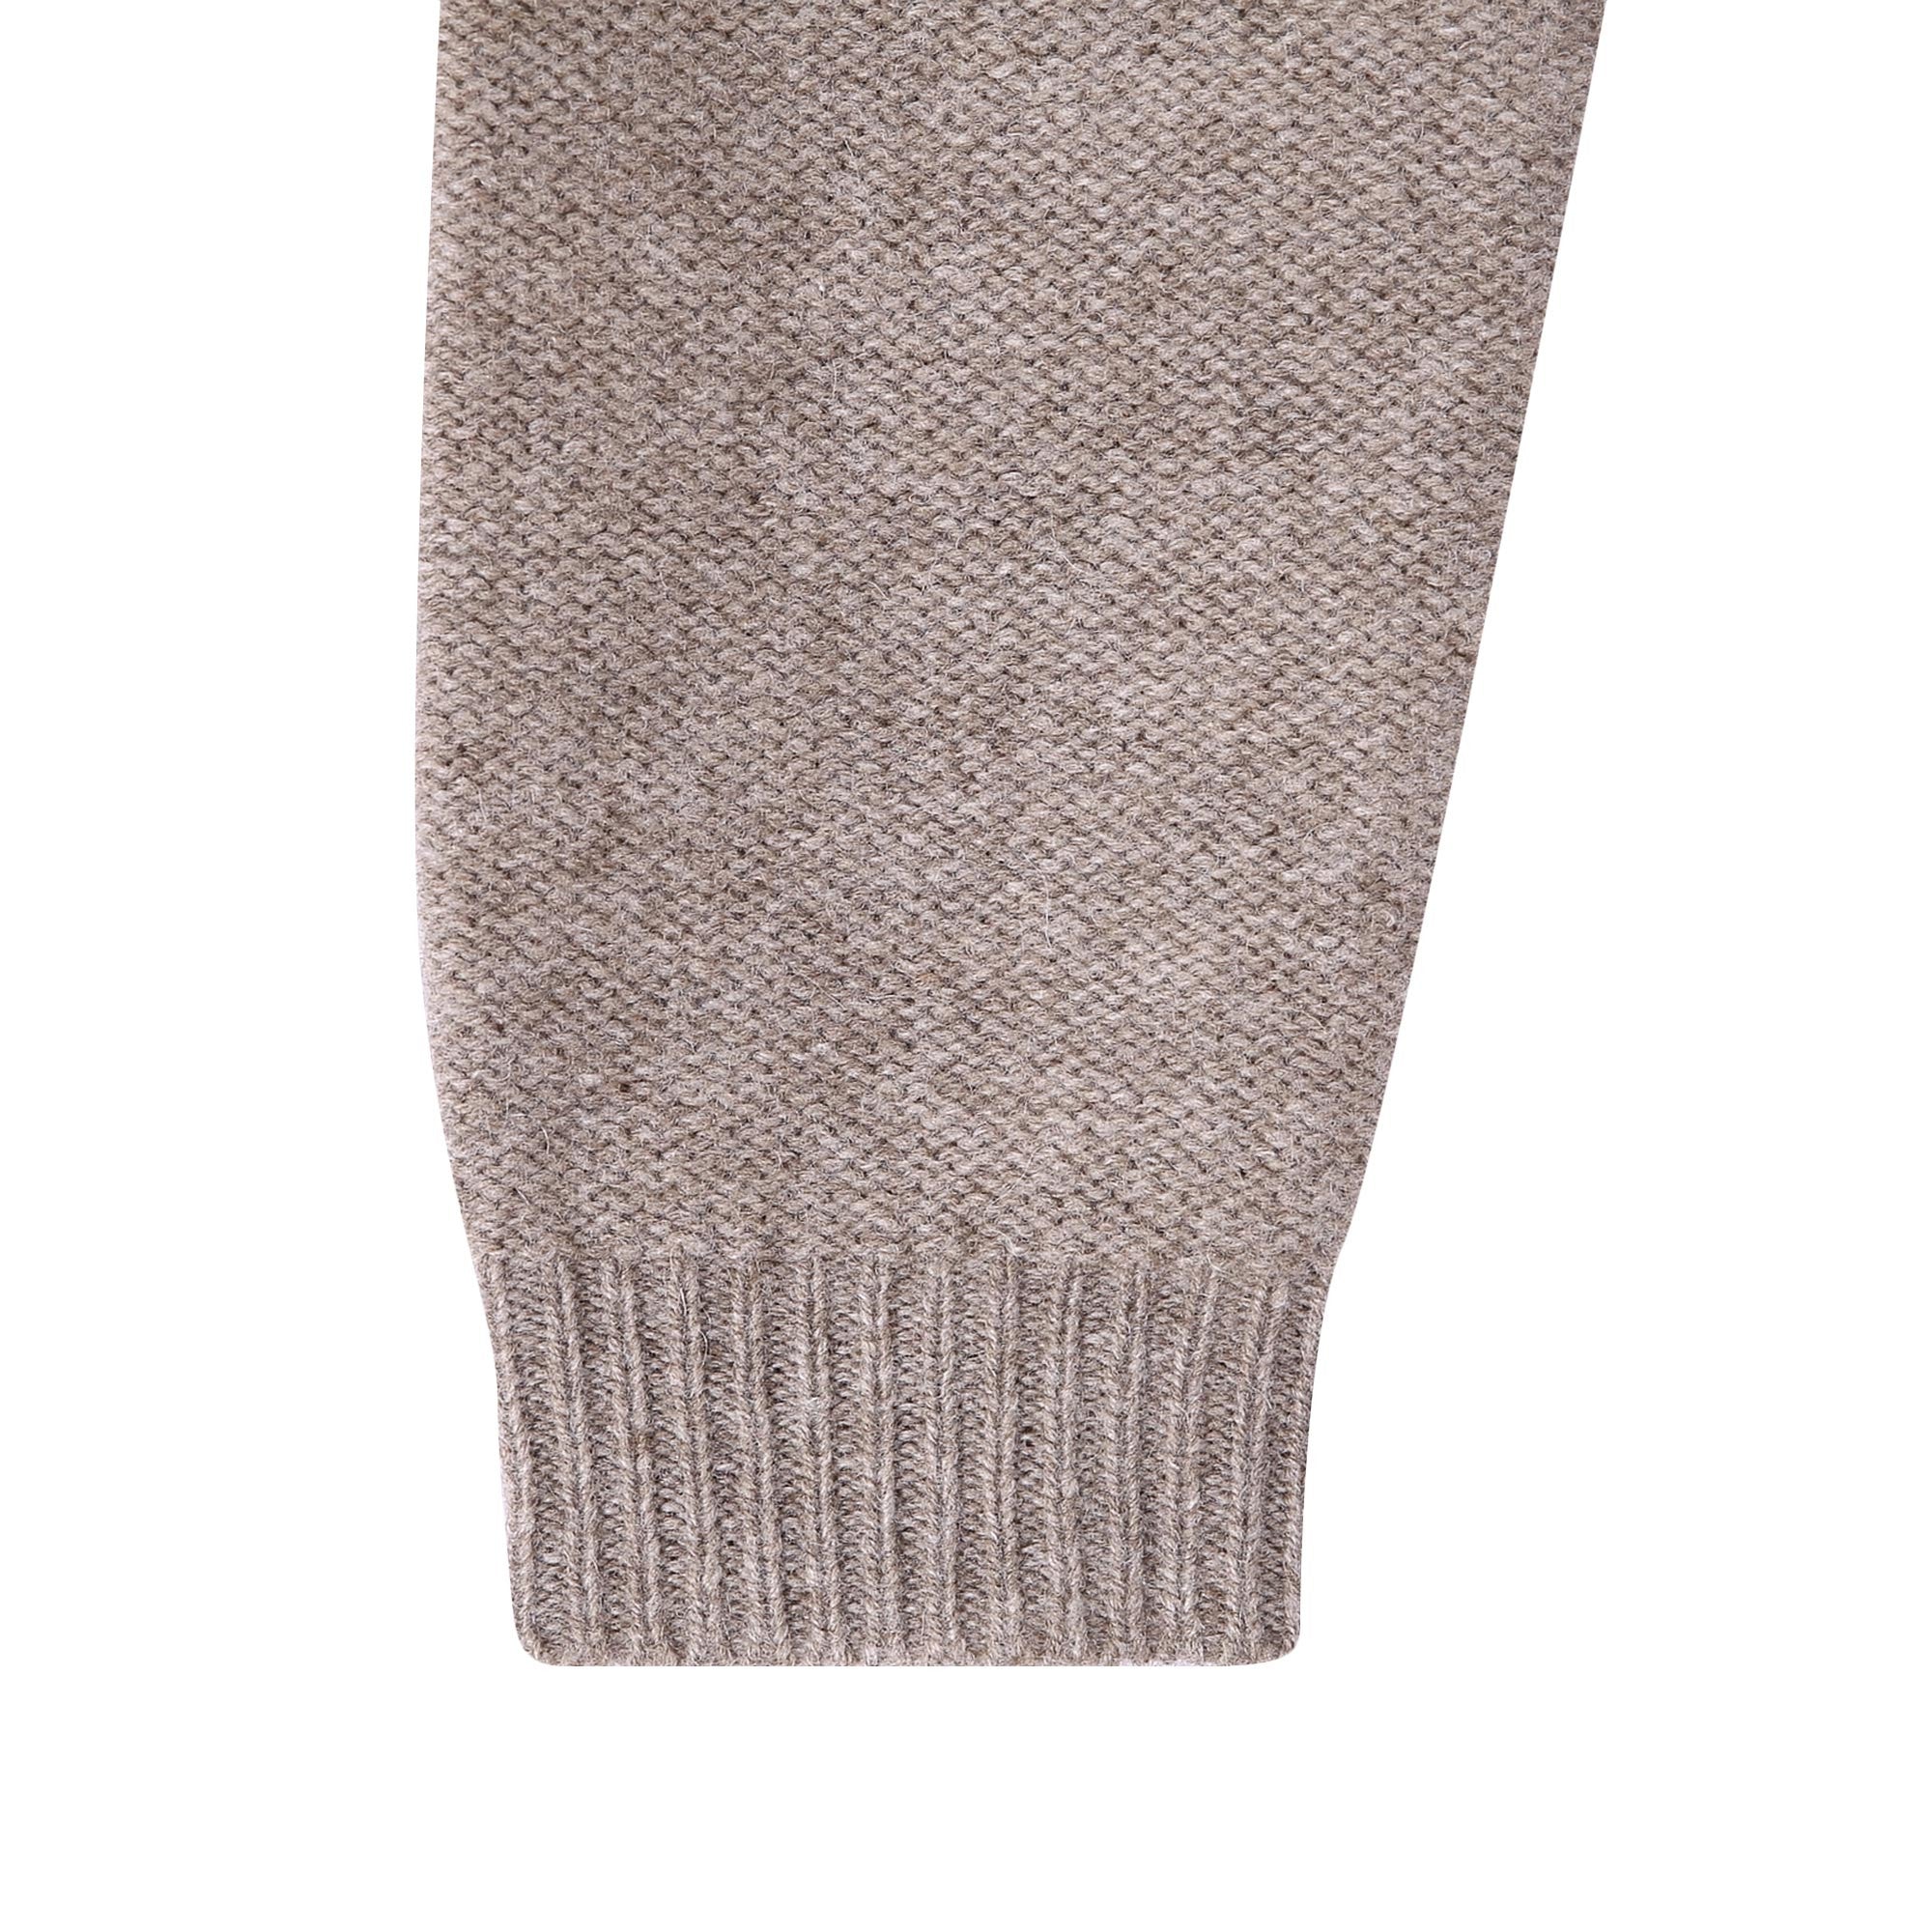 Boys & Girls Grey Wool Knitted Sweater - CÉMAROSE | Children's Fashion Store - 5